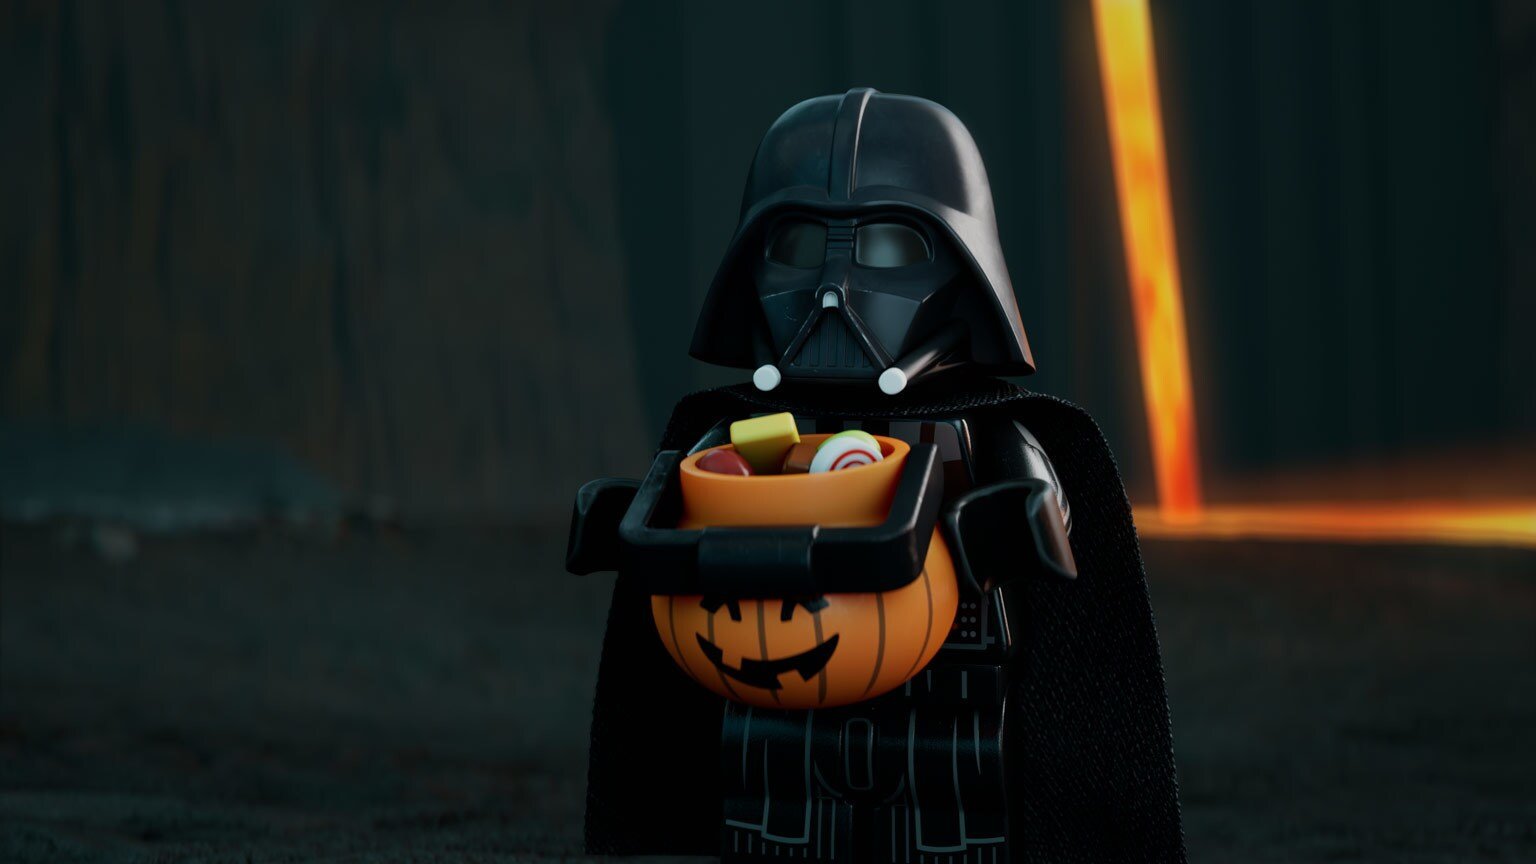 New 'Lego Star Wars' Shorts Arrive For Halloween - Star Wars News Net